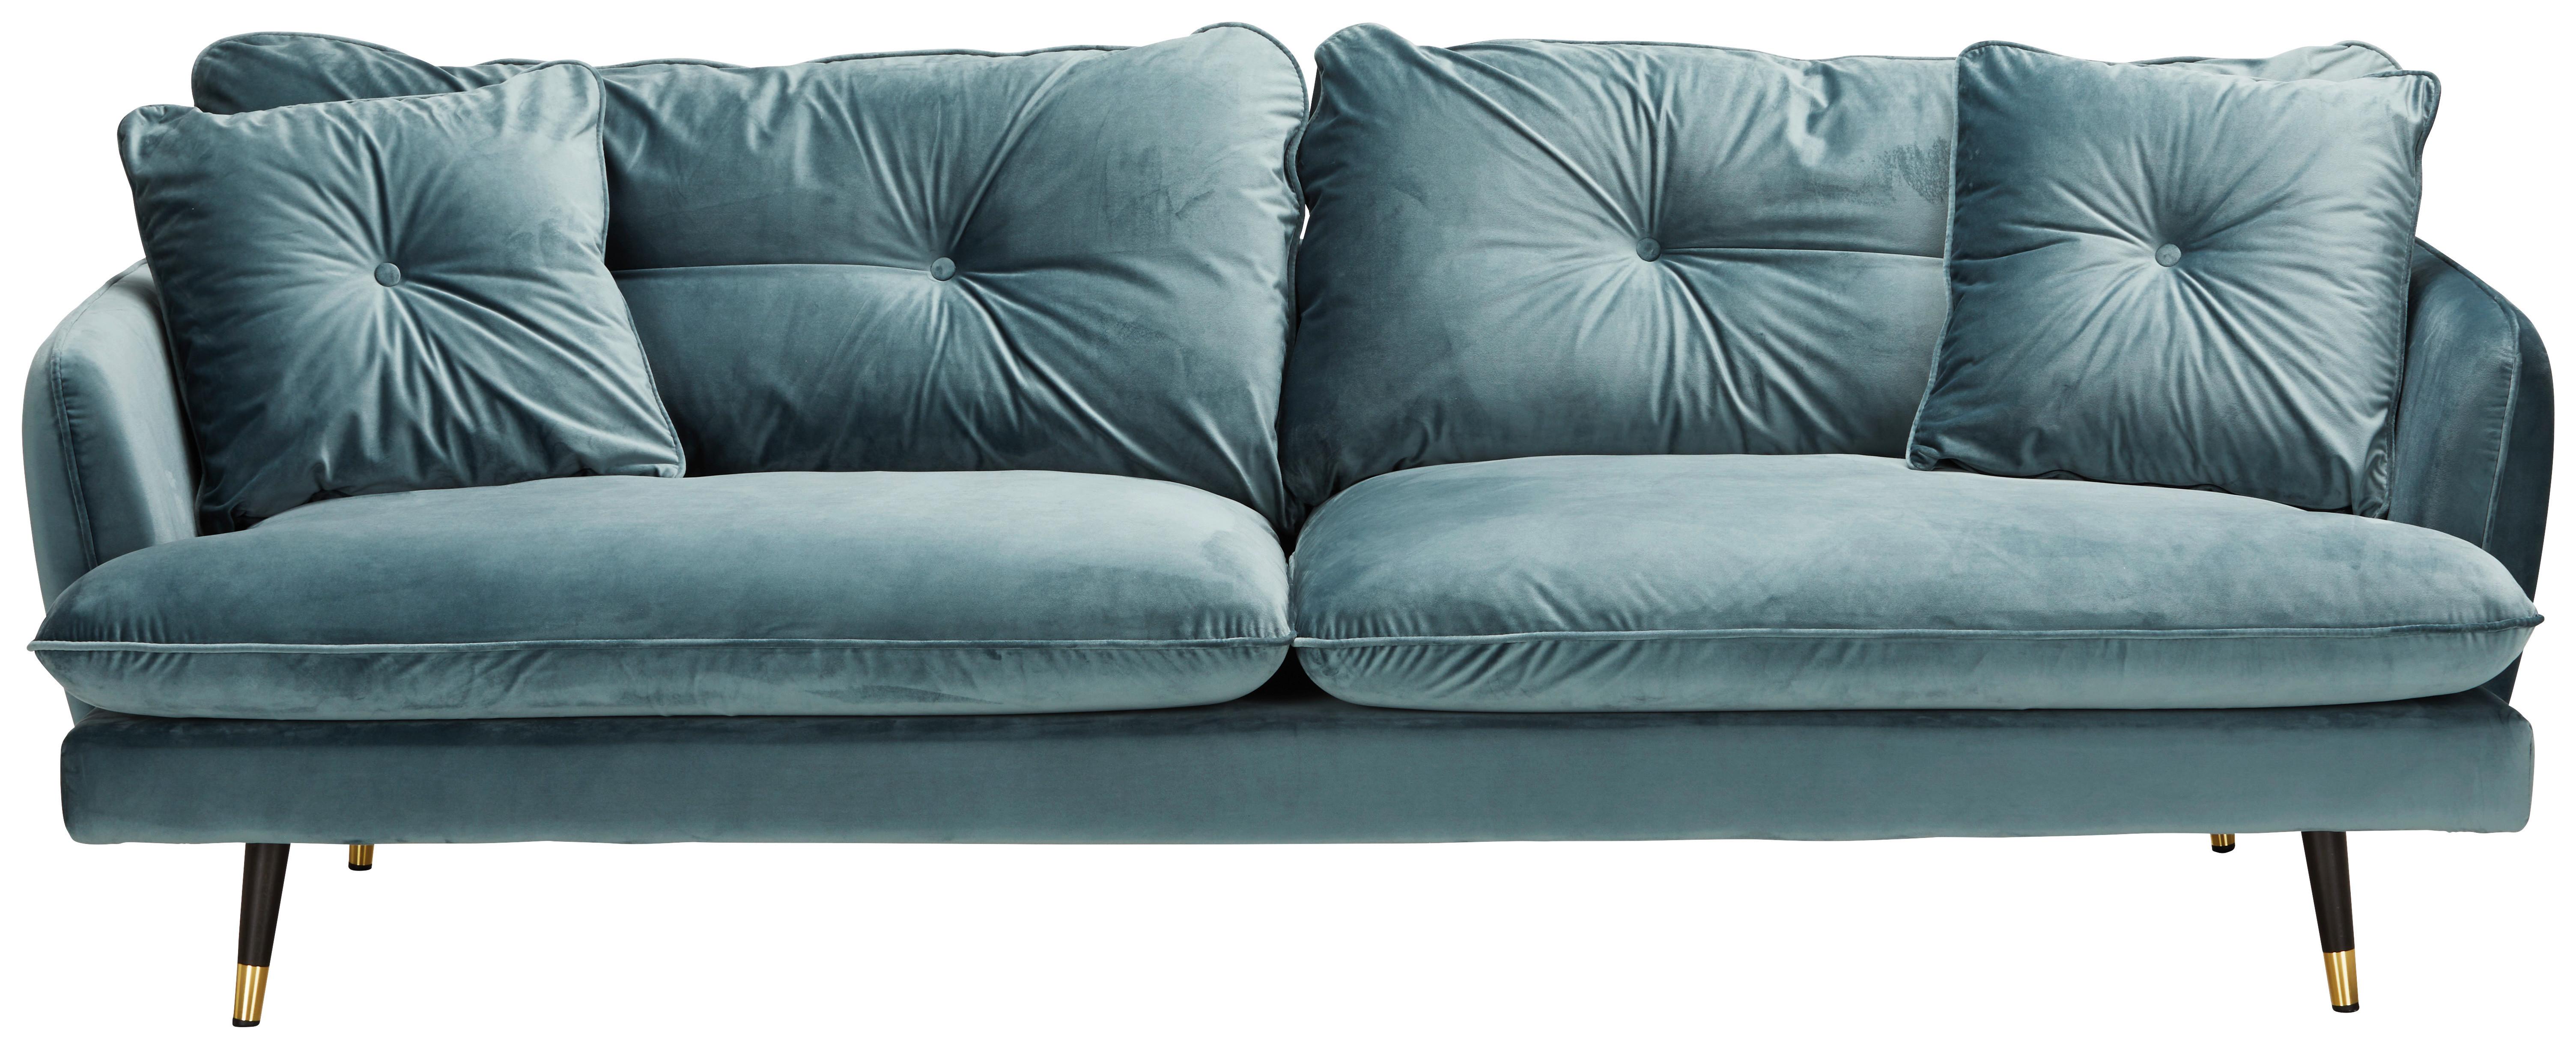 Trojmiestna Pohovka Time -3s Sofa -Trend- - petrolejová, Moderný, textil (232/80/95cm) - Modern Living